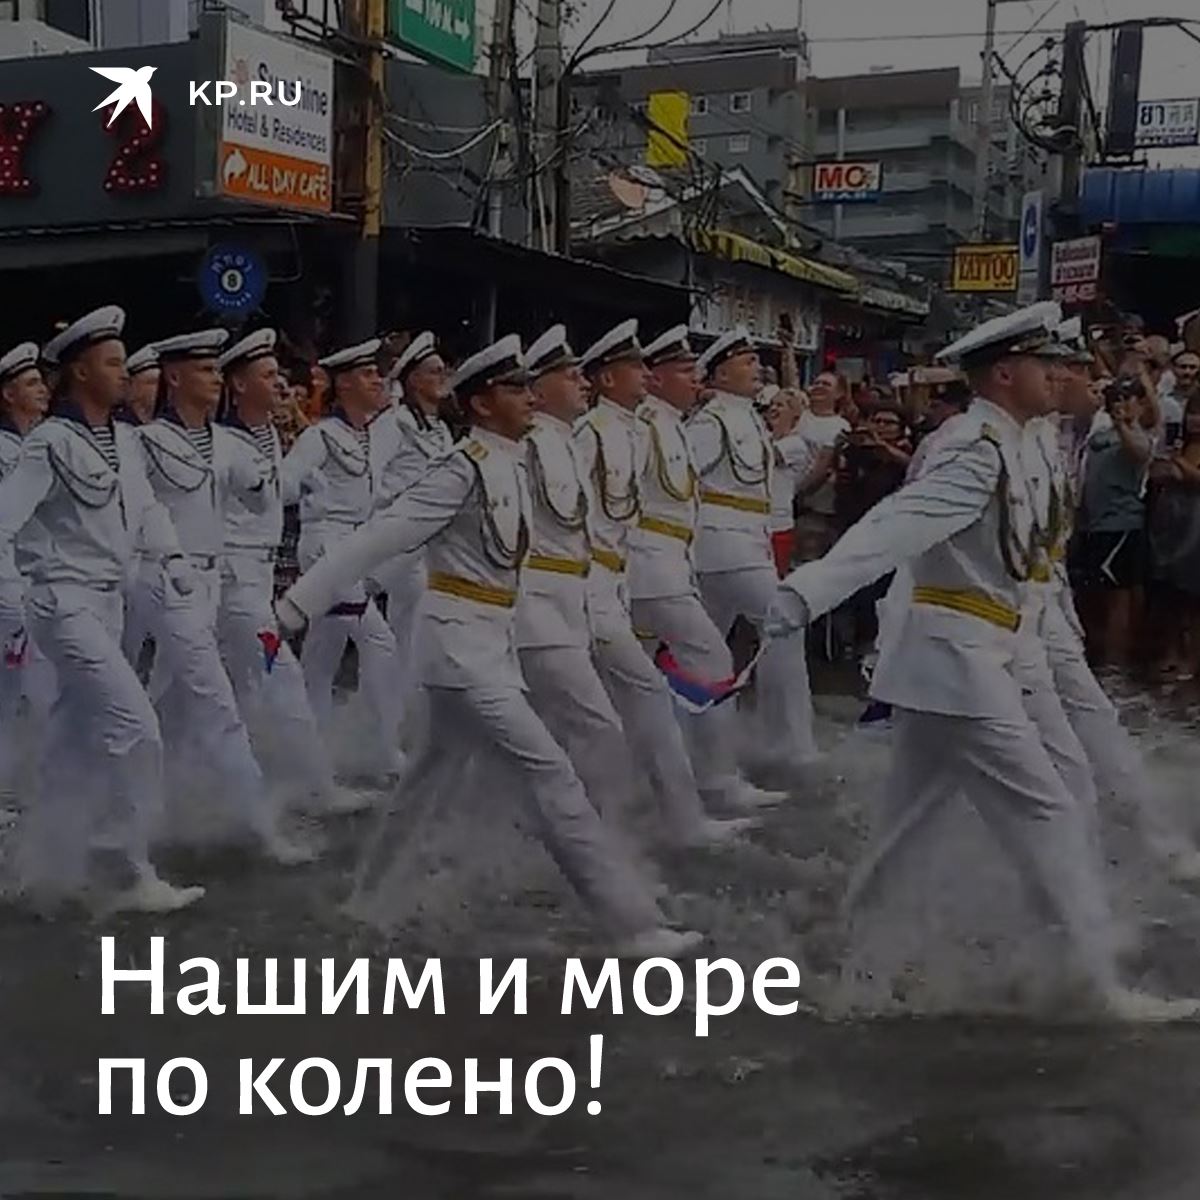 Русские моряки на параде в Тайланде. Российские военные на параде в Тайланде. Парад в Японии русские моряки. Парад русских моряков в Тайланде после ливня. Видео парад в тайланде